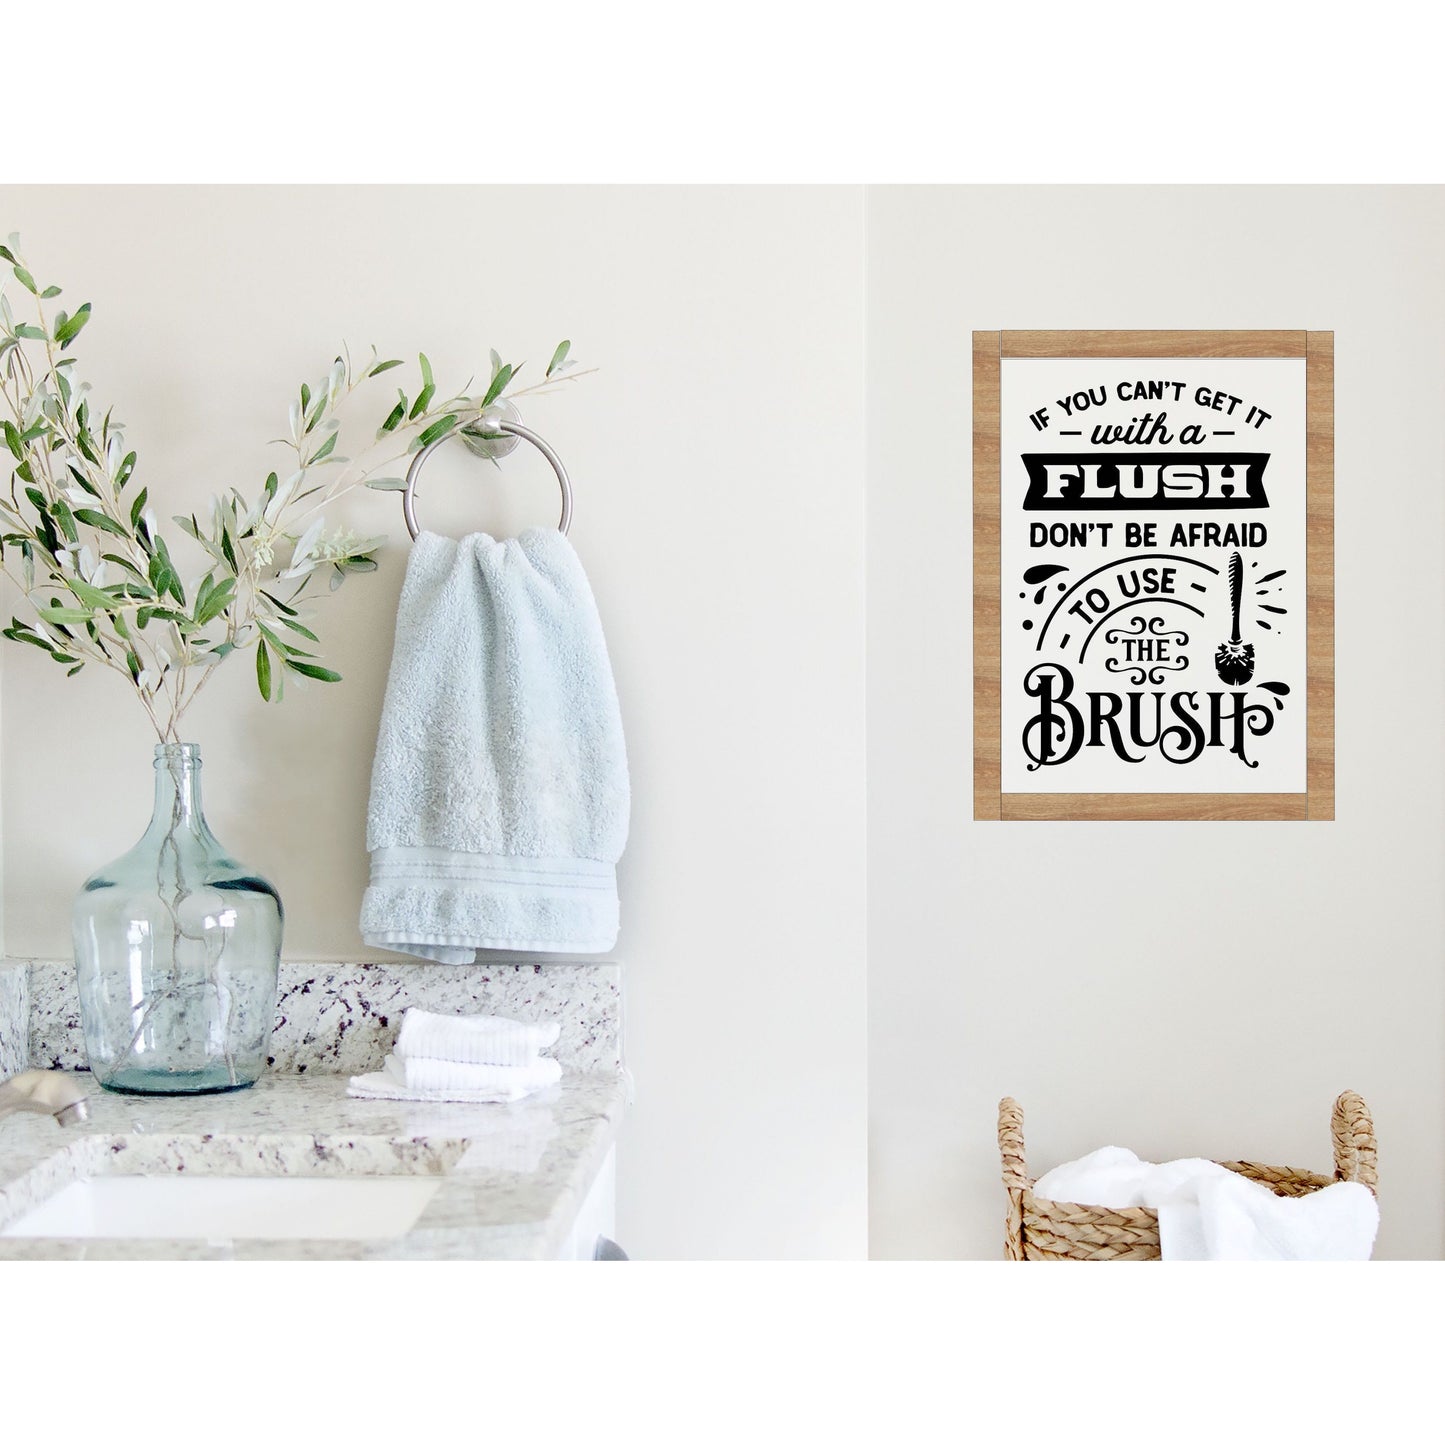 Funny Bathroom & Laundry Framed Gallery signs